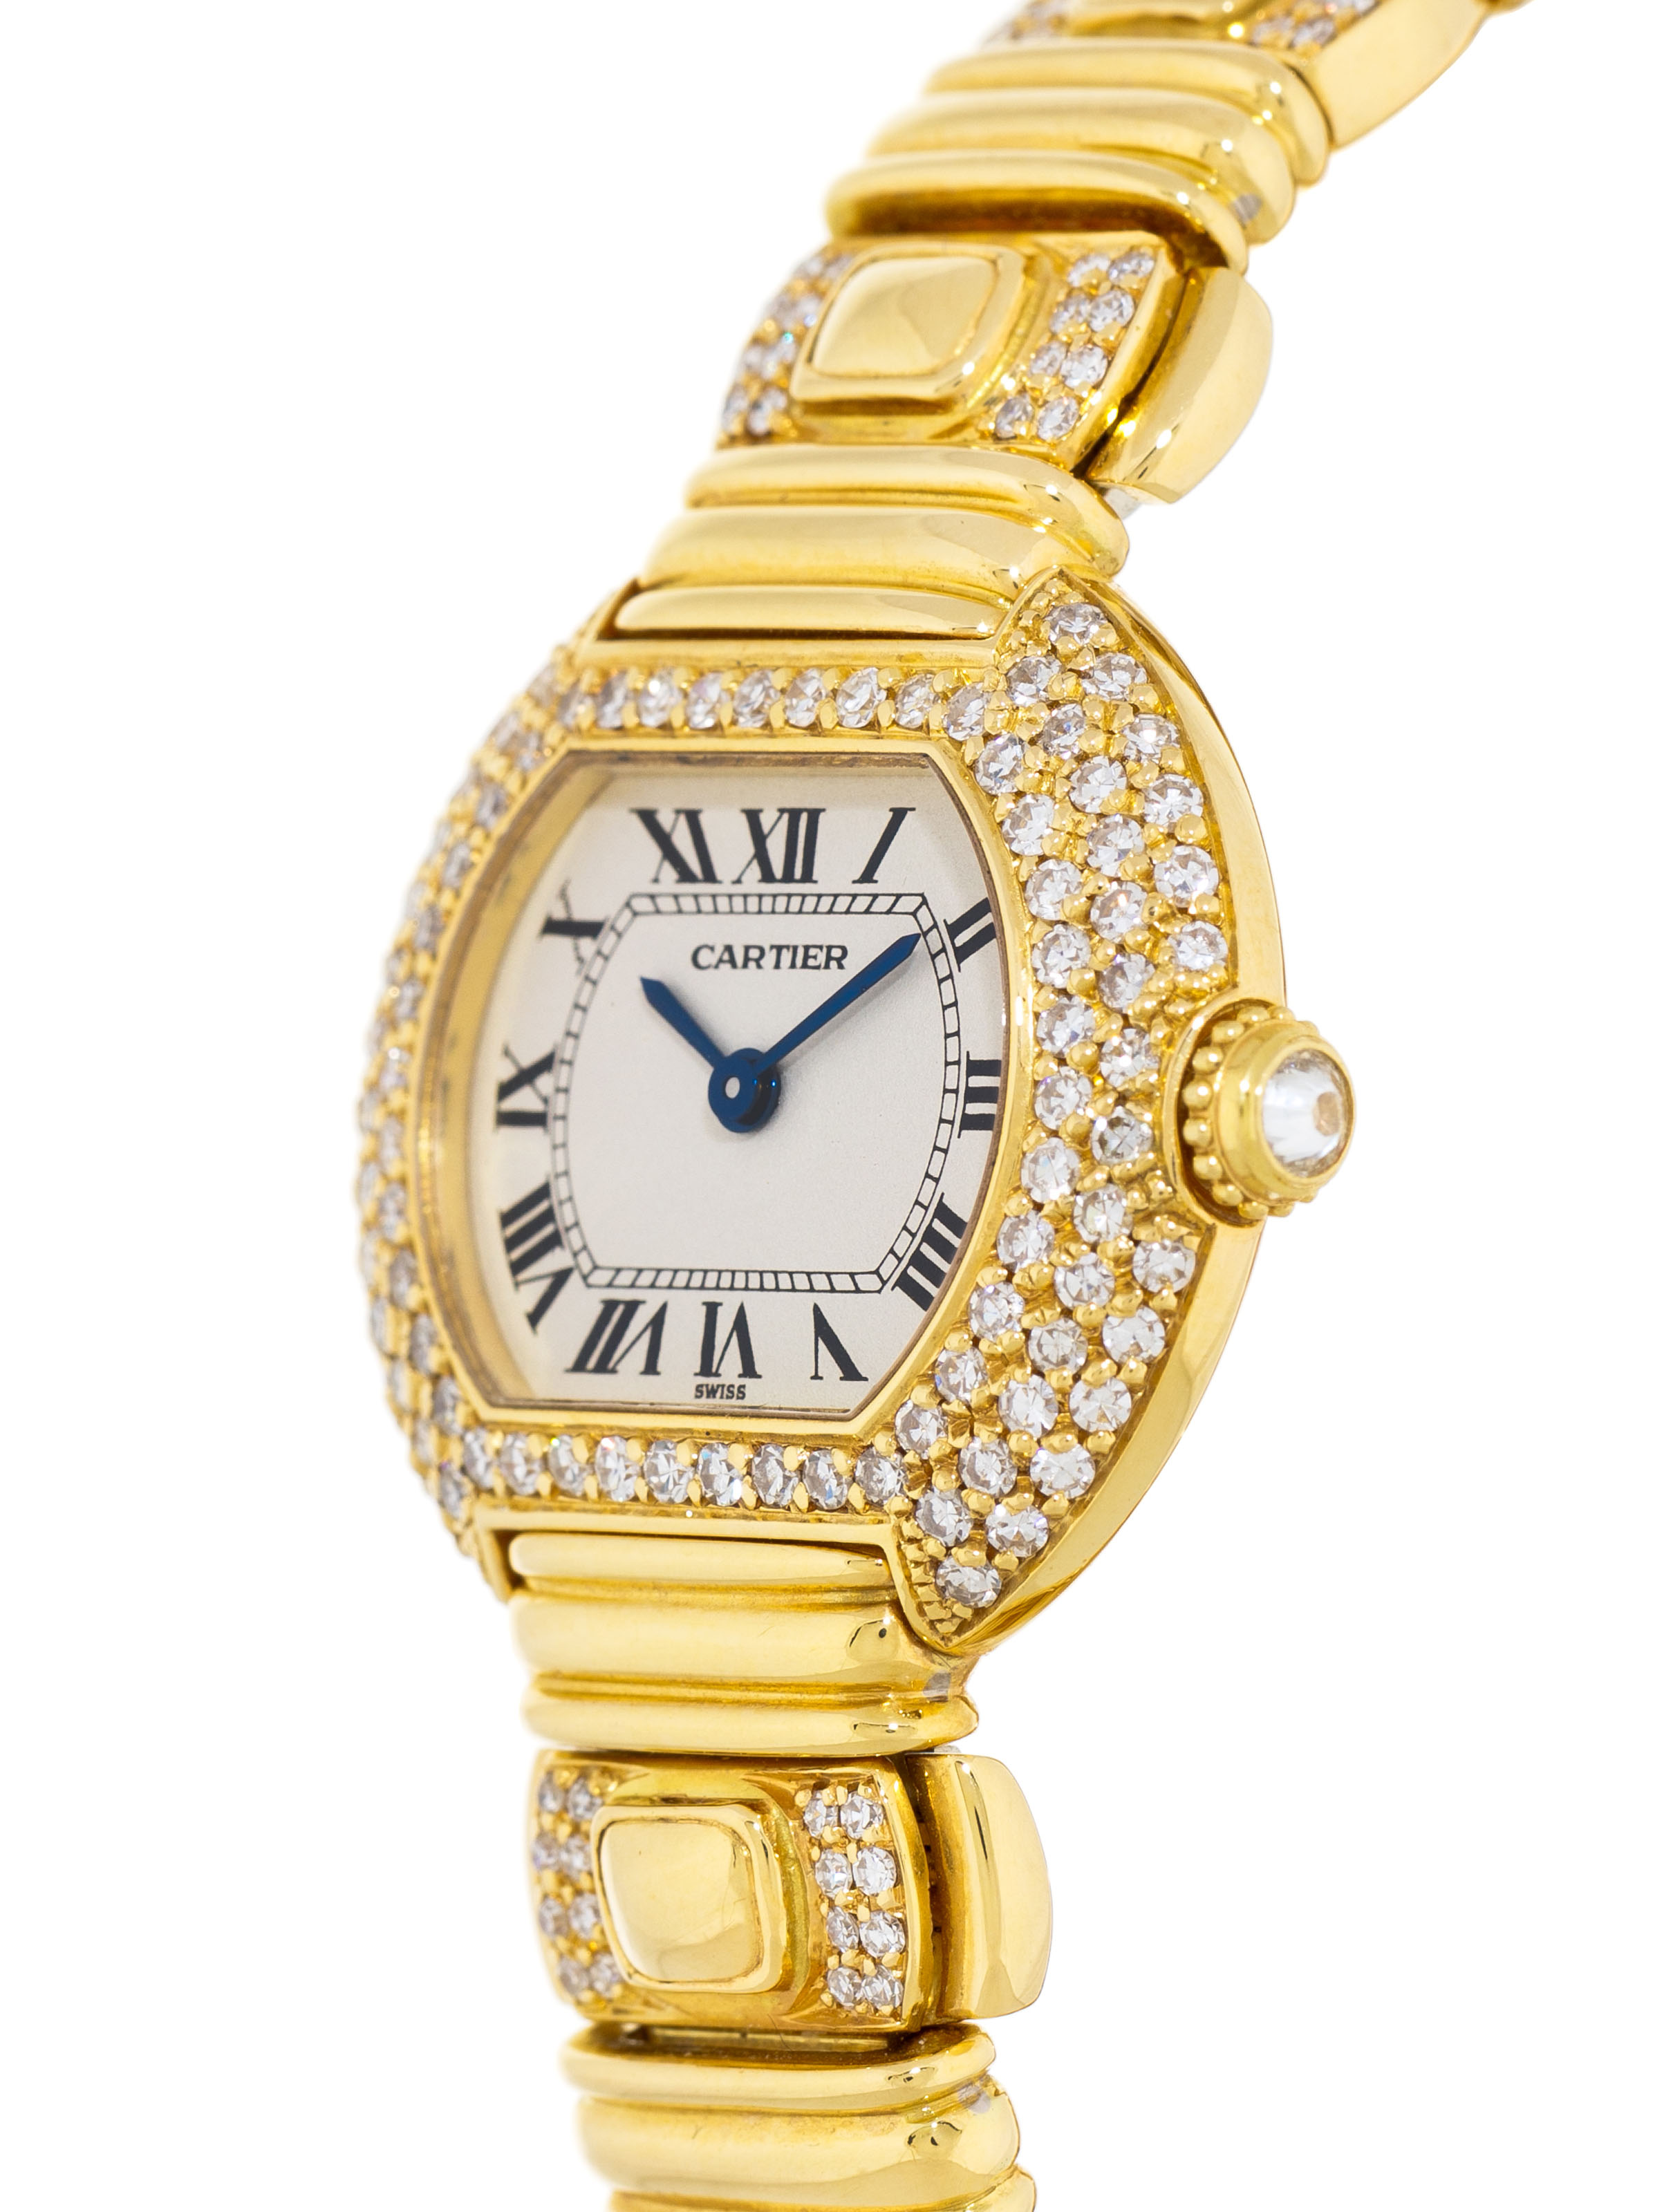 Cartier, Ellipse, montre-bracelet en or 750 sertie de diamants, transformable en bracelet - Image 2 of 6